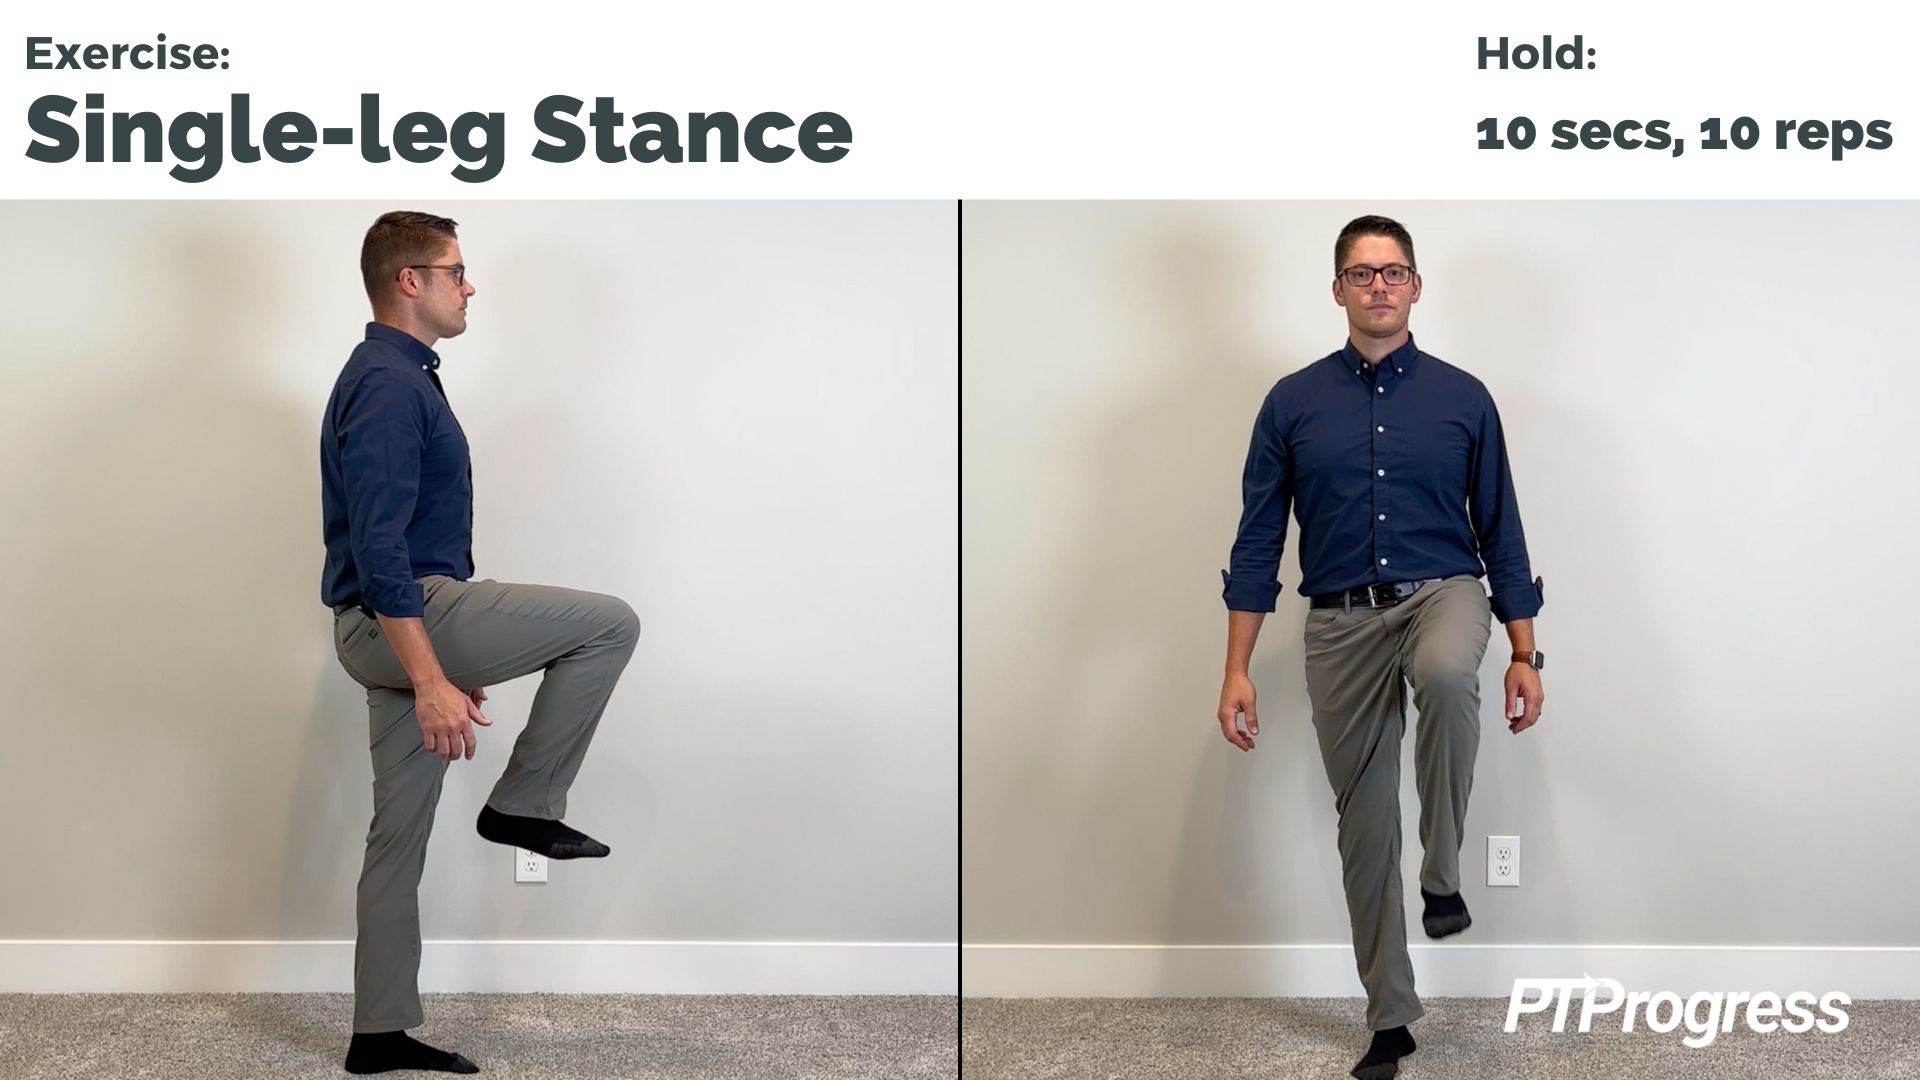 single-leg stance hold